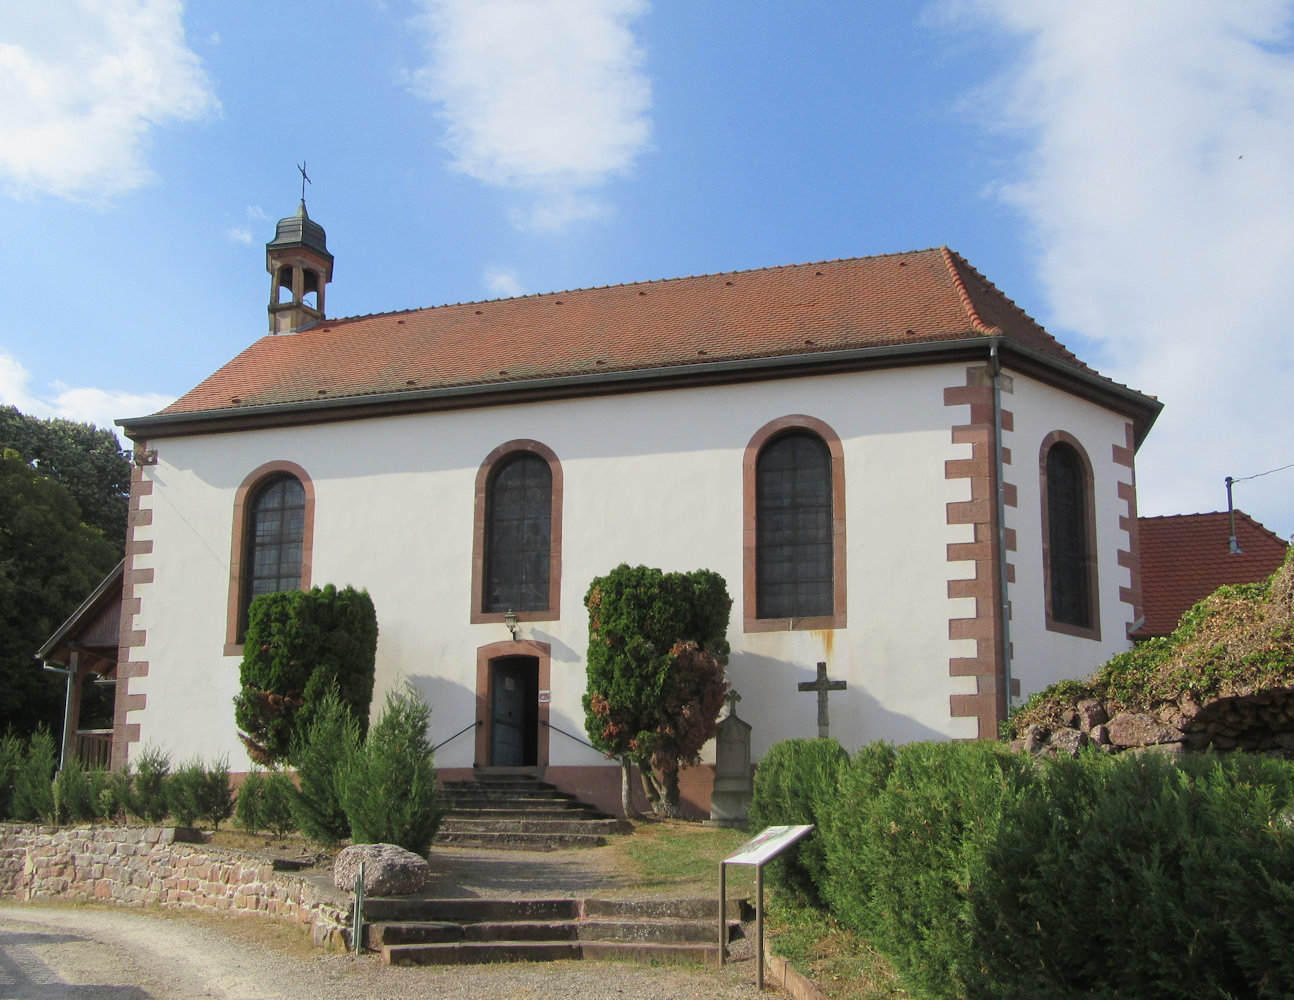 Die Florentius geweihte Kapelle in Oberhaslach